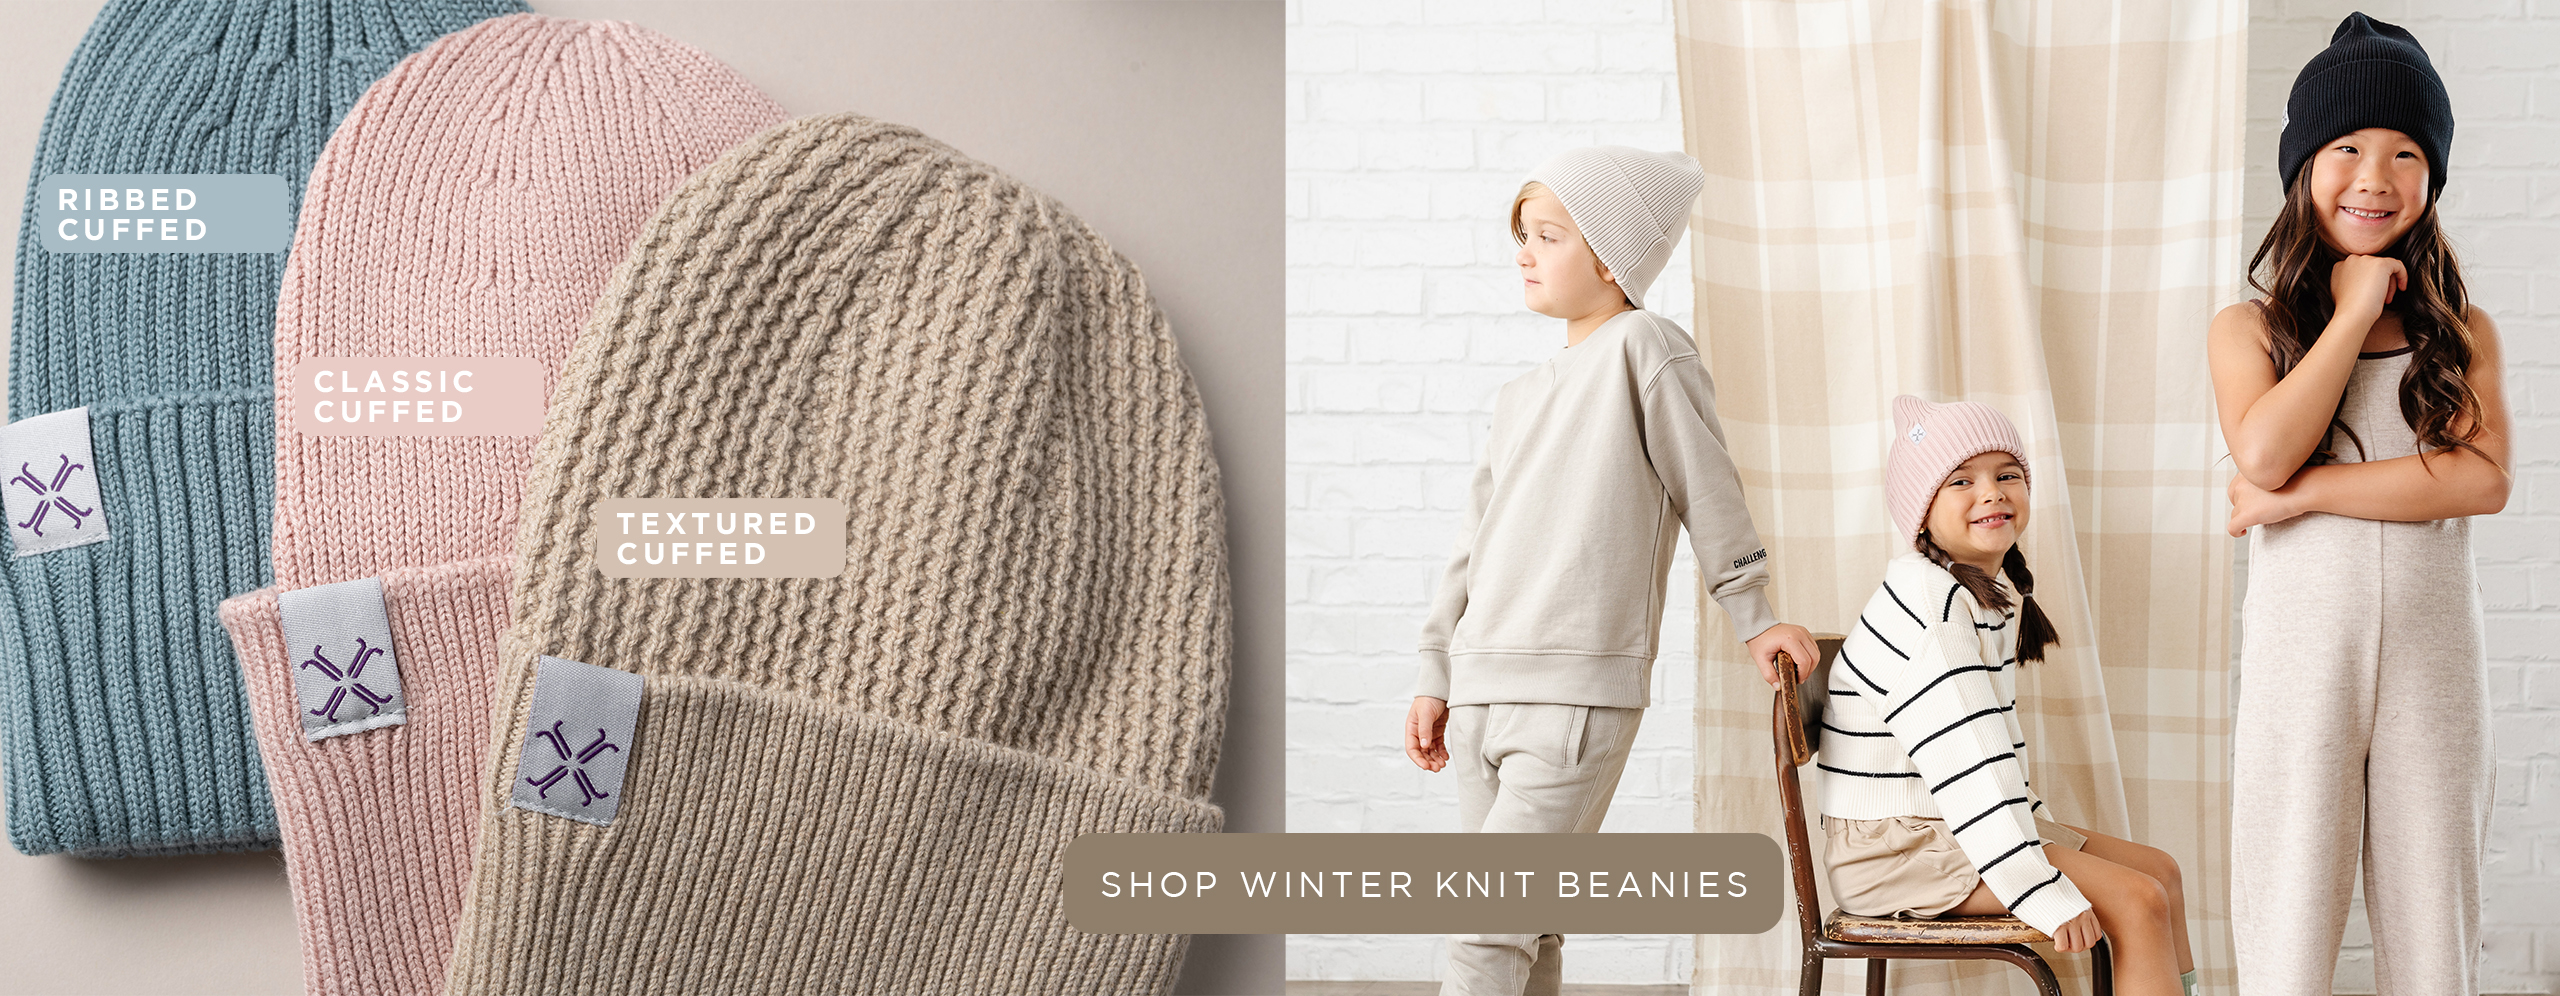 Winter Knit Beanies